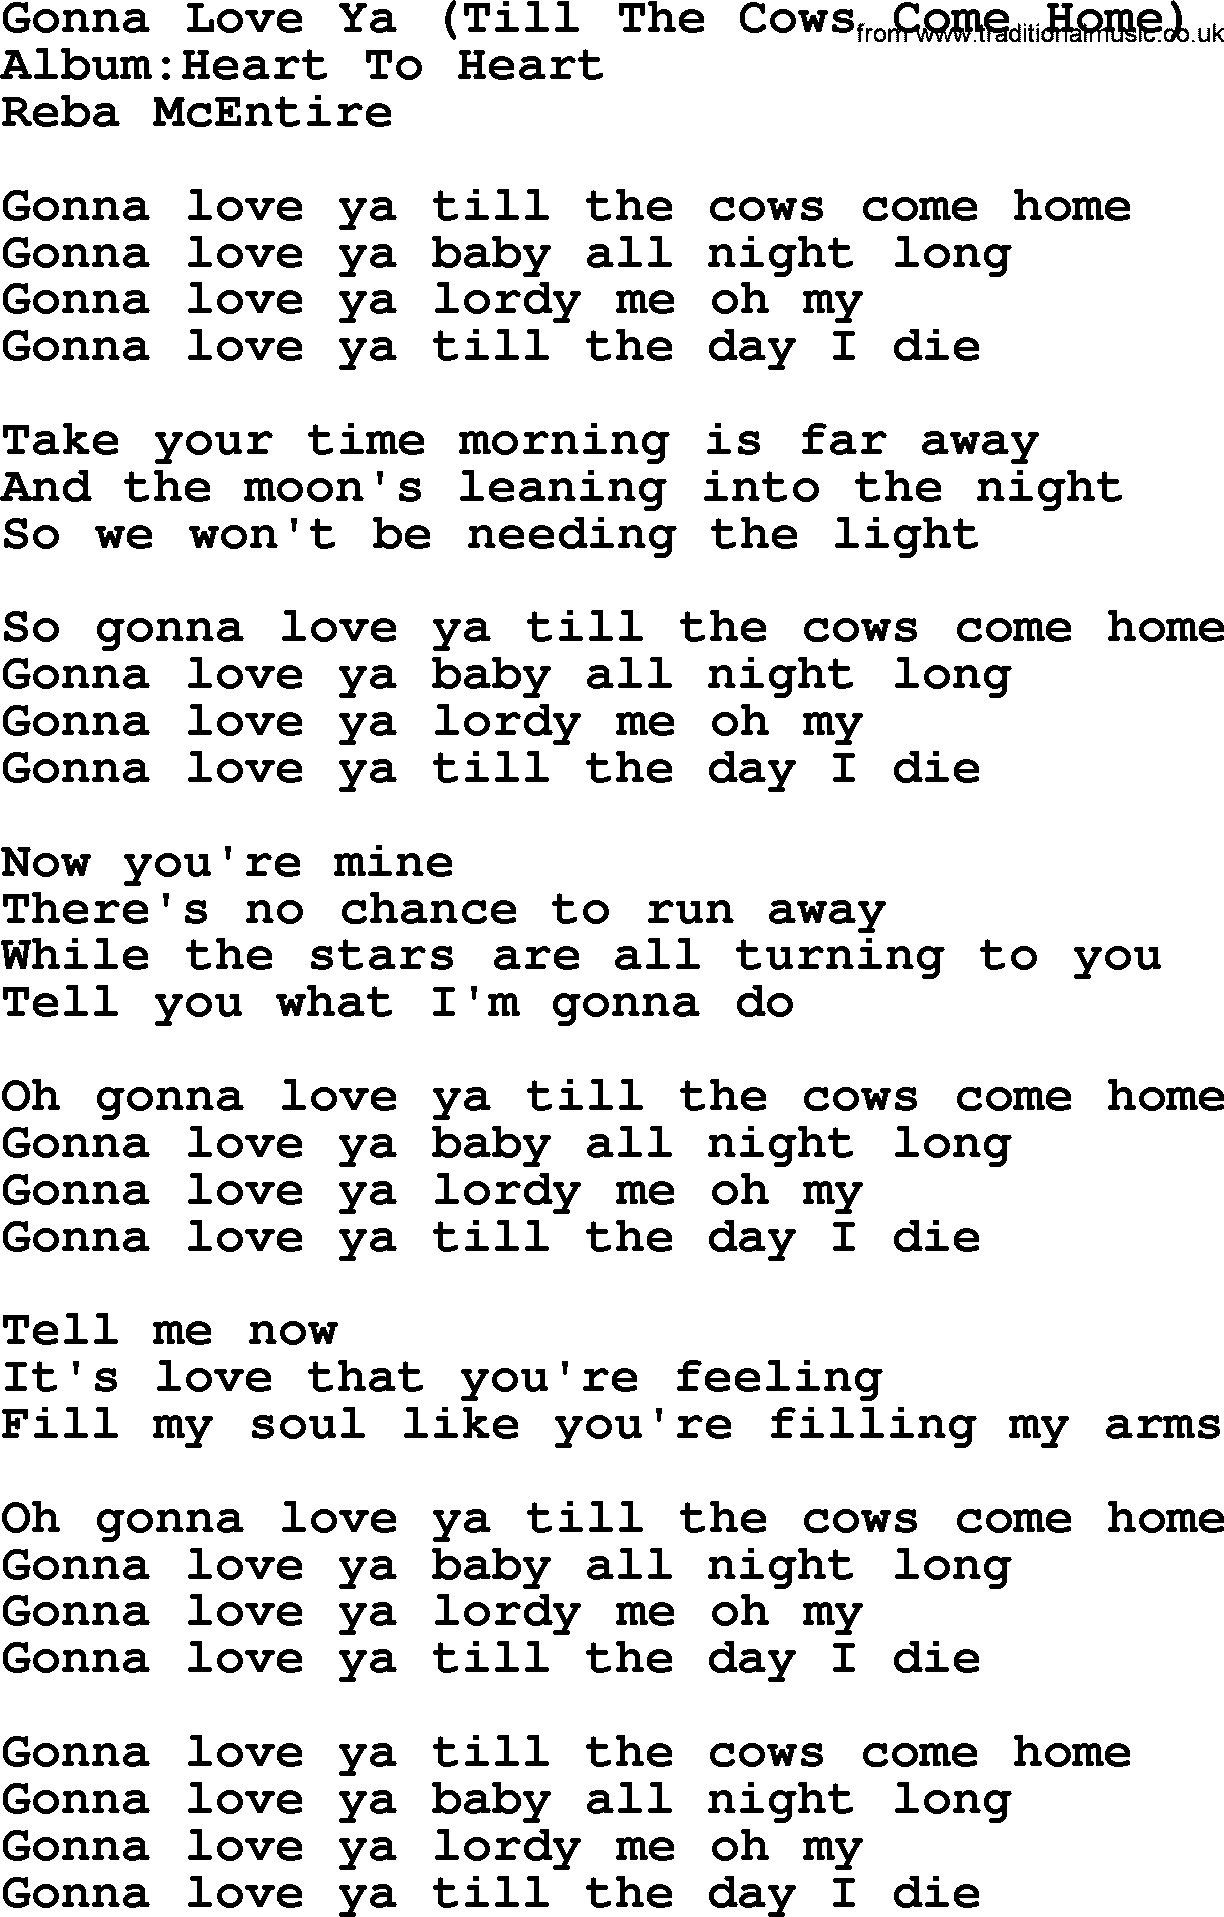 Reba McEntire song: Gonna Love Ya Till The Cows Come Home  lyrics